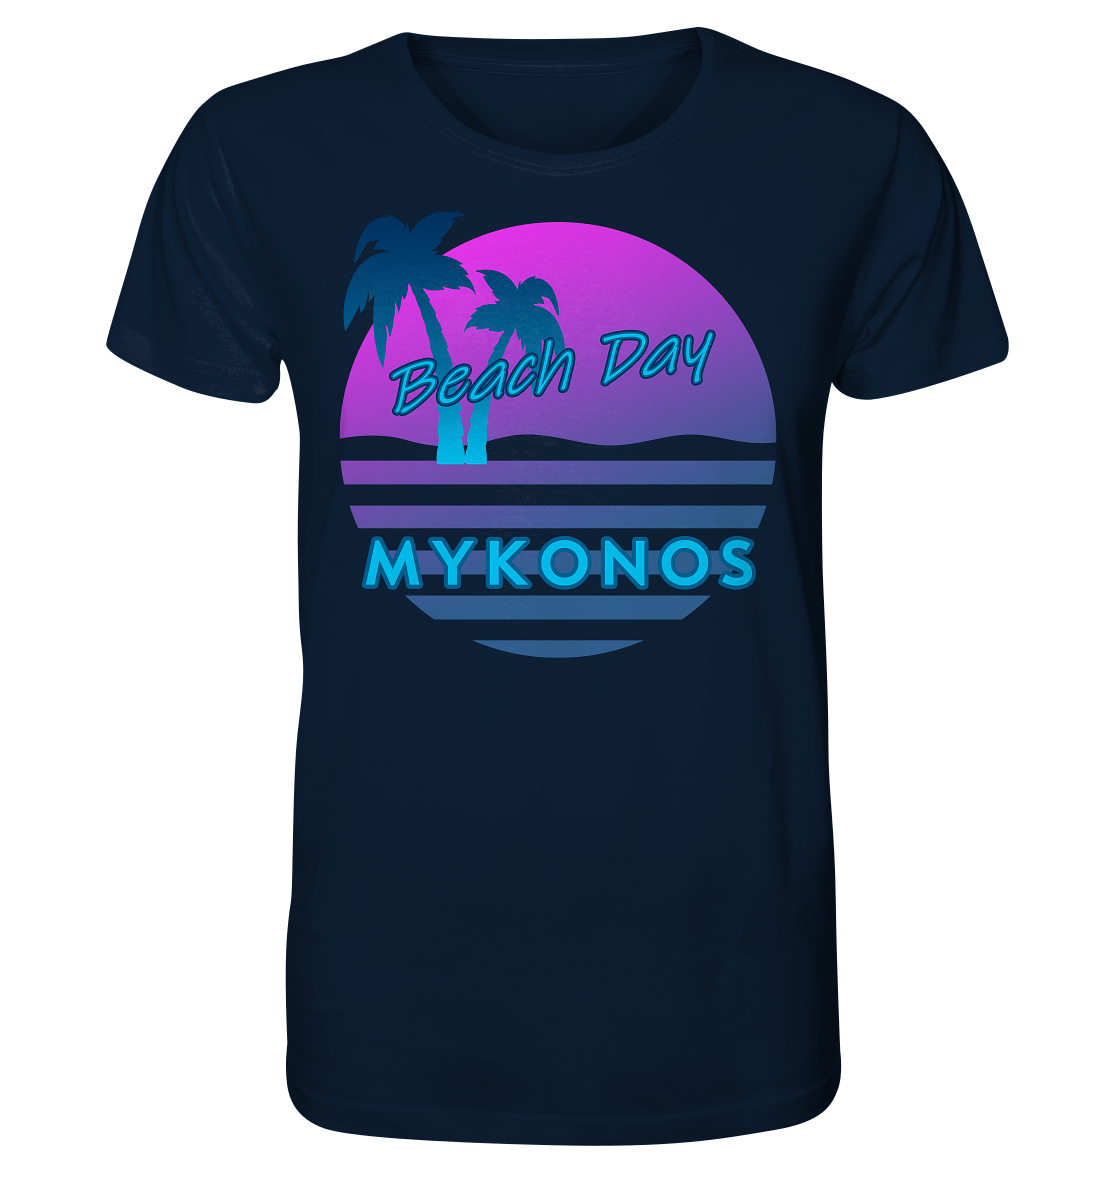 Beach Day Mykonos - Organic Shirt